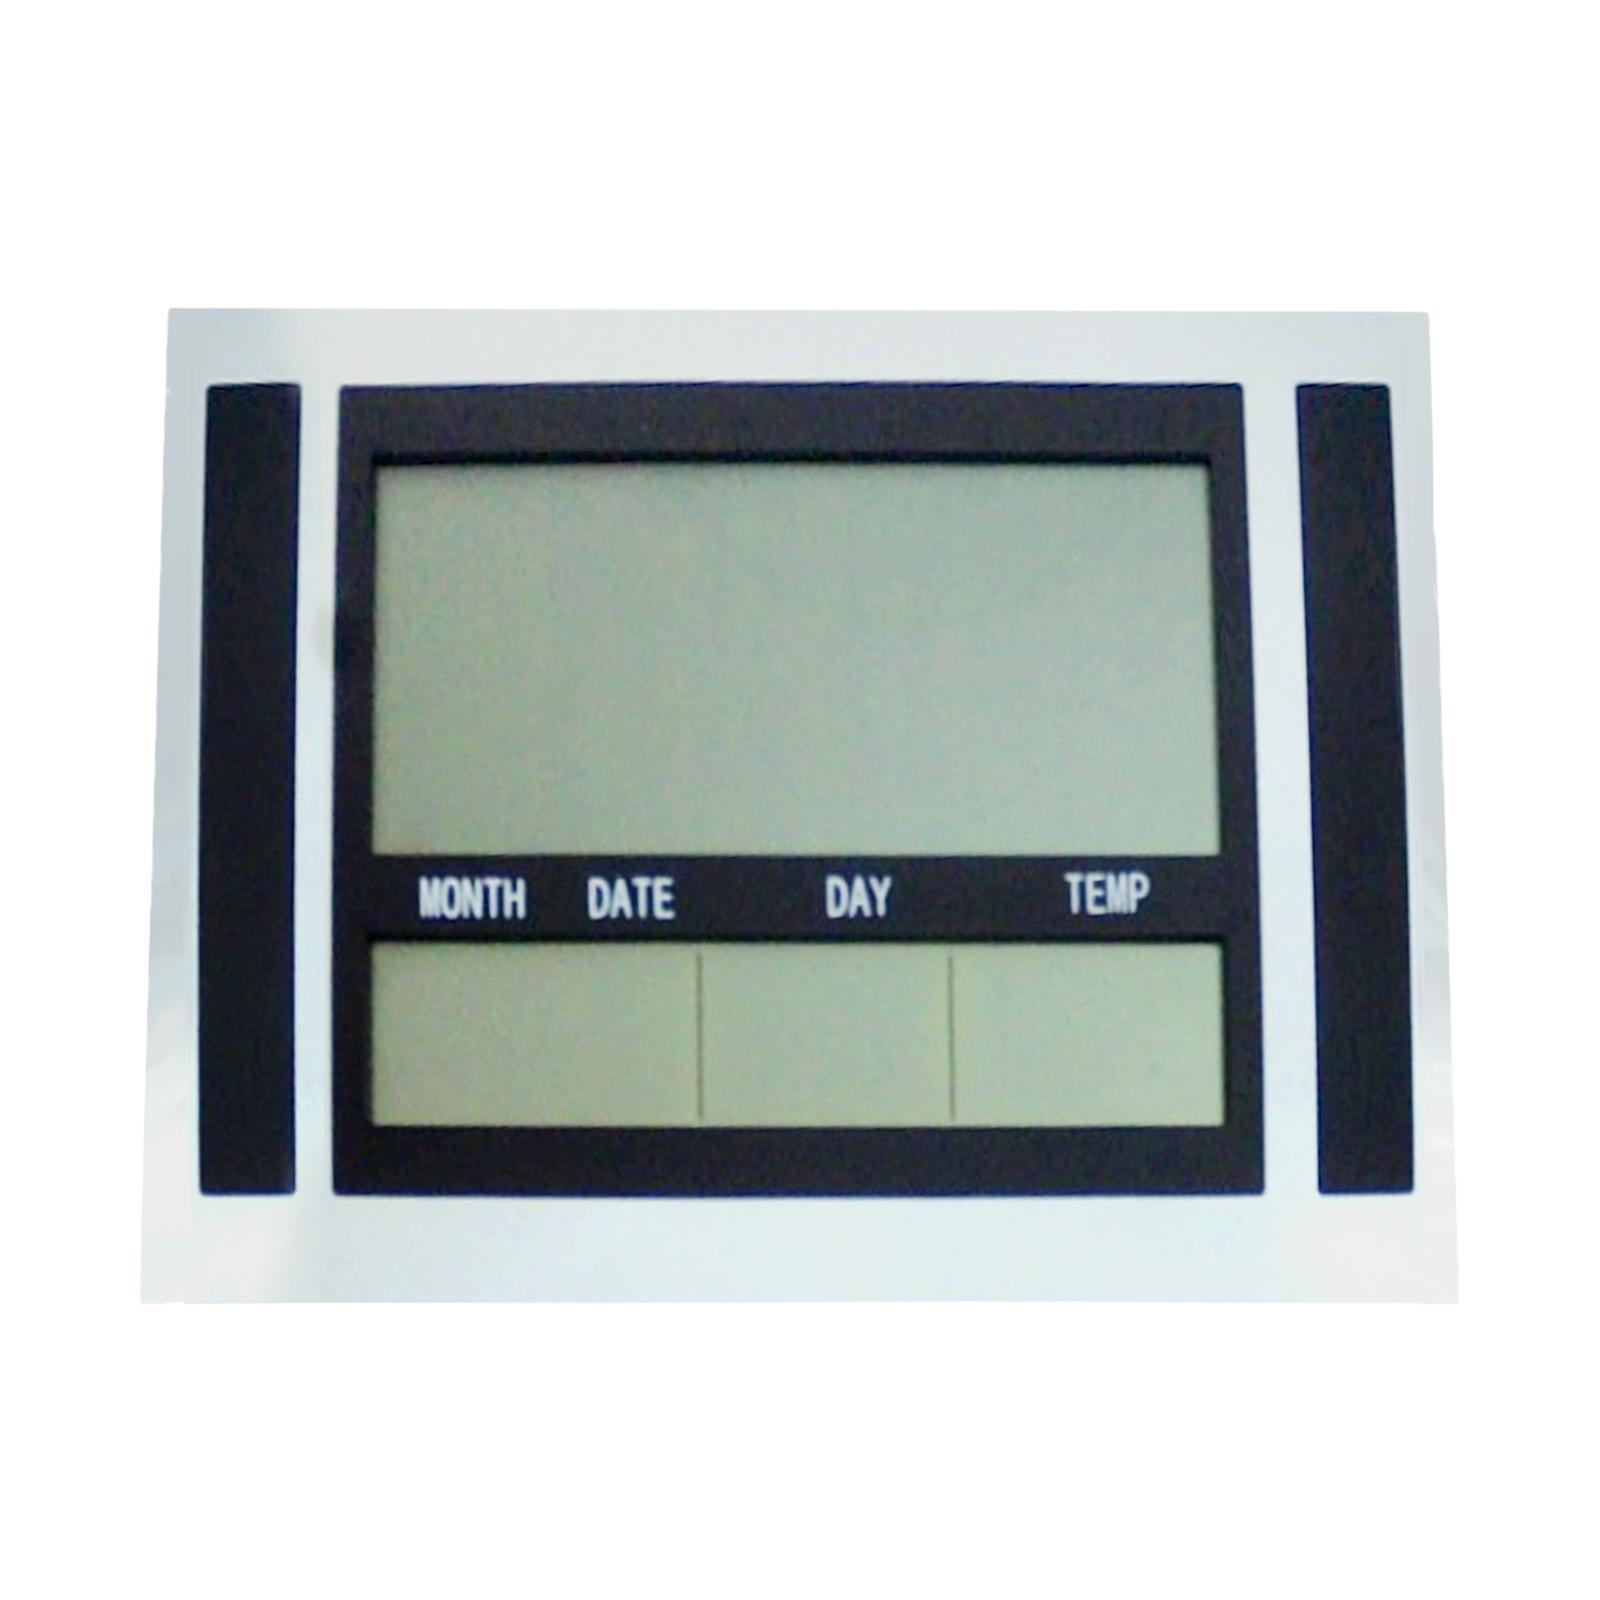 2x Digital Alarm Clock Desktop LCD Display Clock with Backlight and